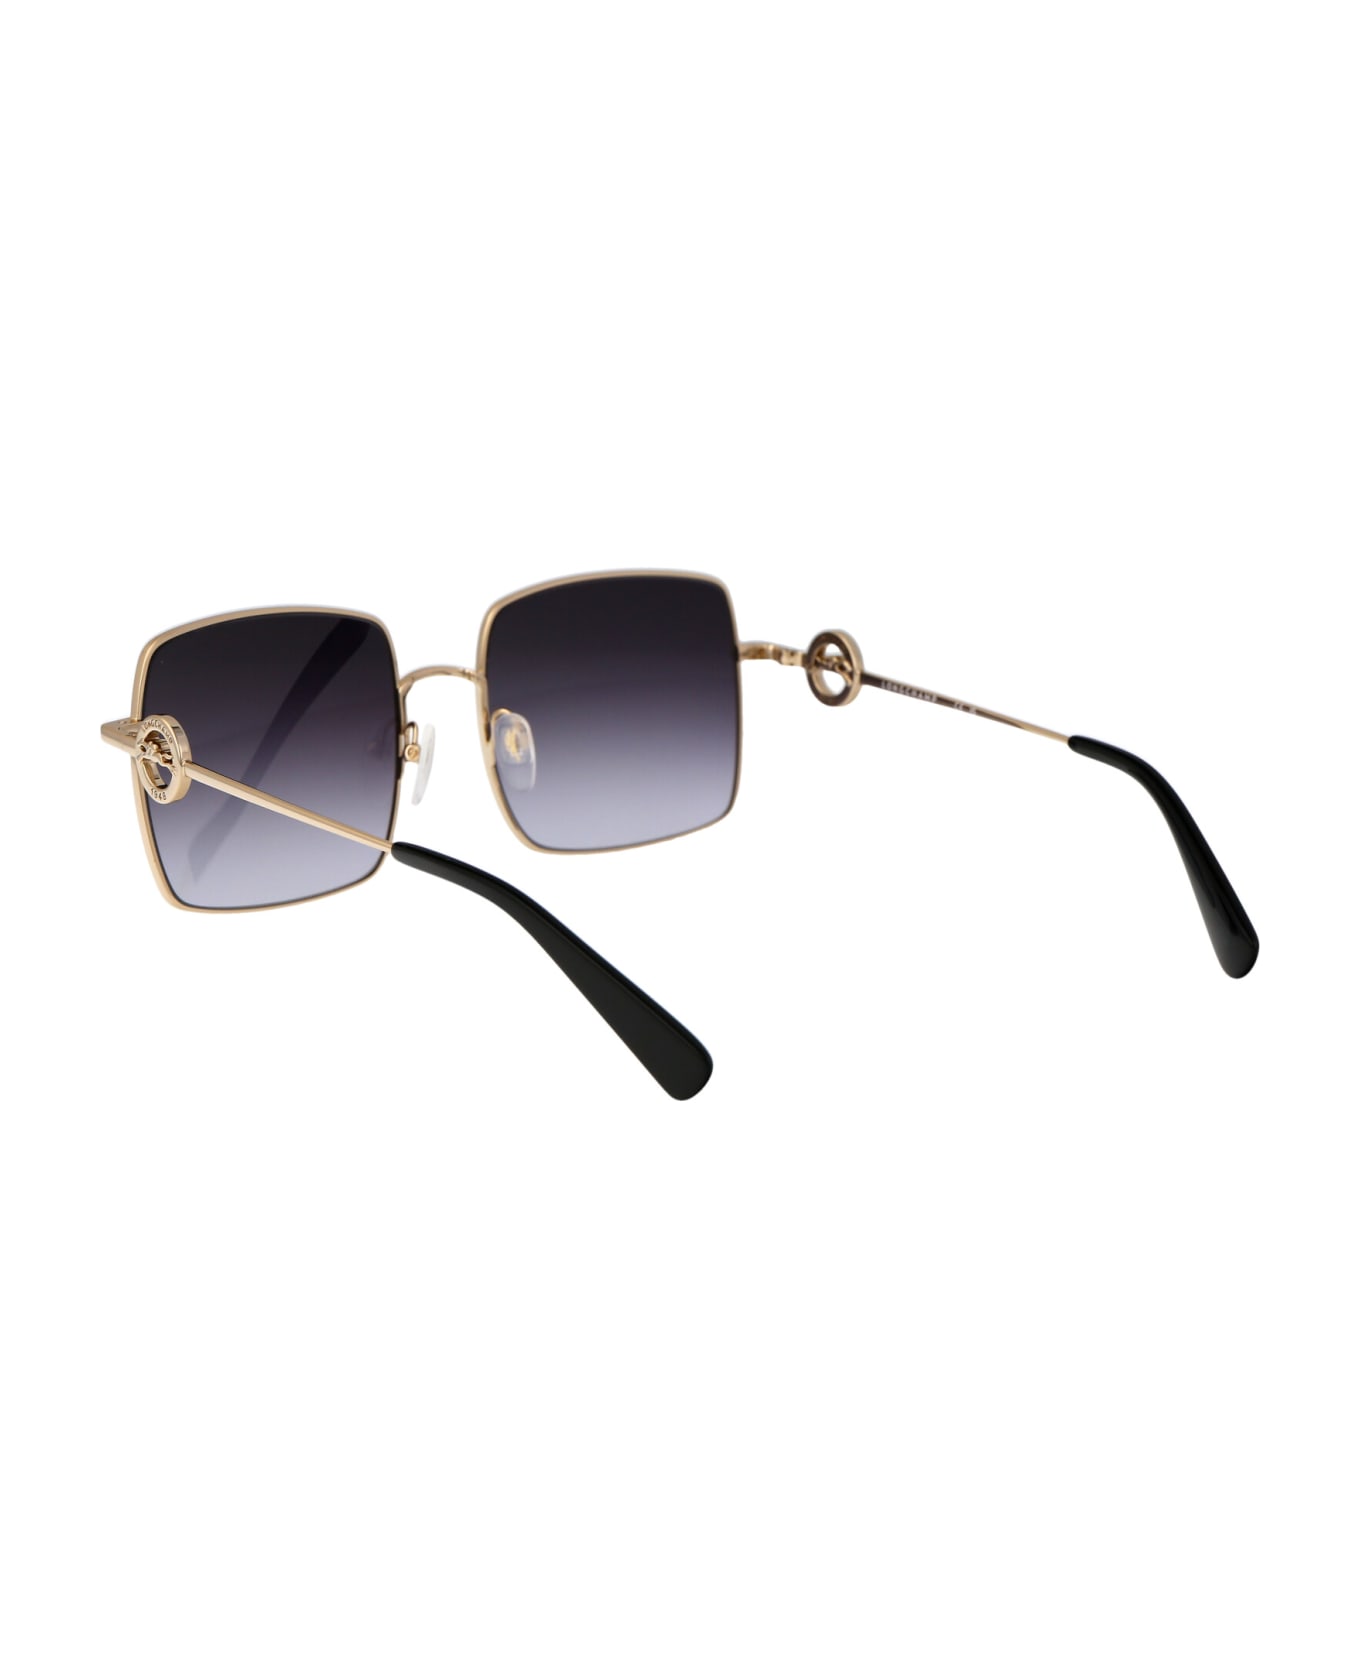 Longchamp Lo162s Sunglasses - 753 GOLD